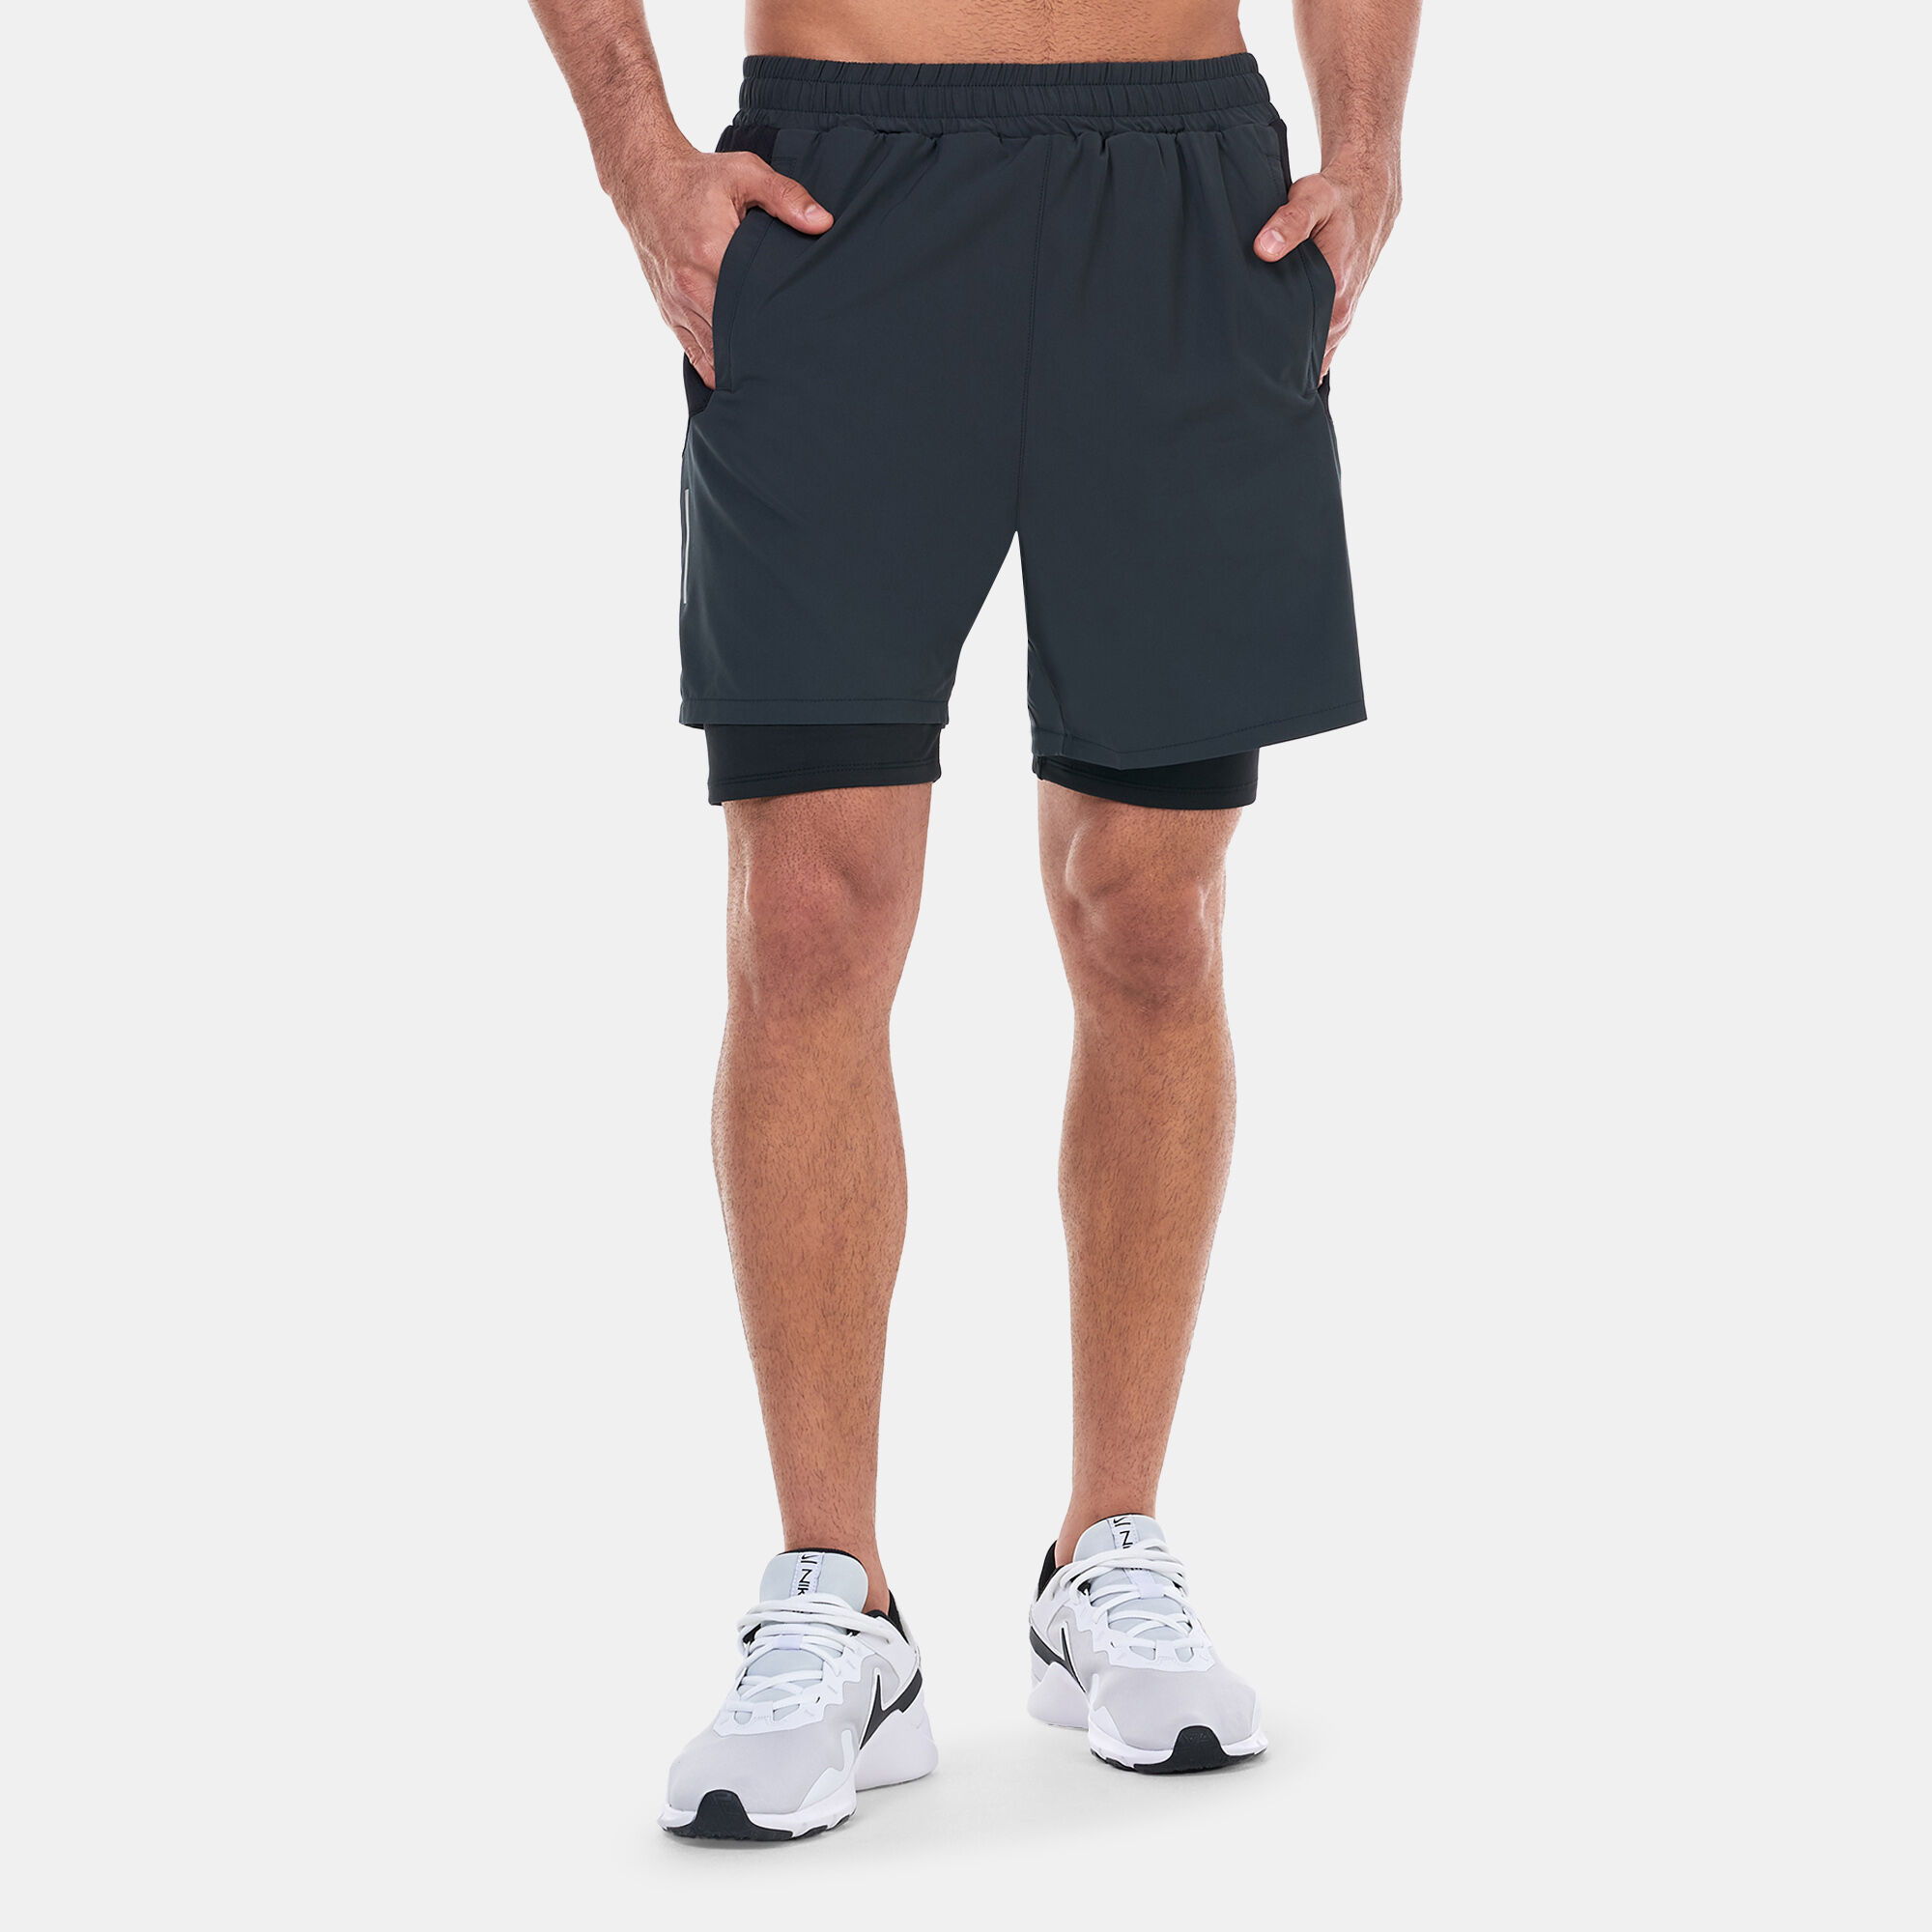 Buy Sun and Sand Sports Men's Hybrid 2.0 Training Shorts Grey in Kuwait -SSS